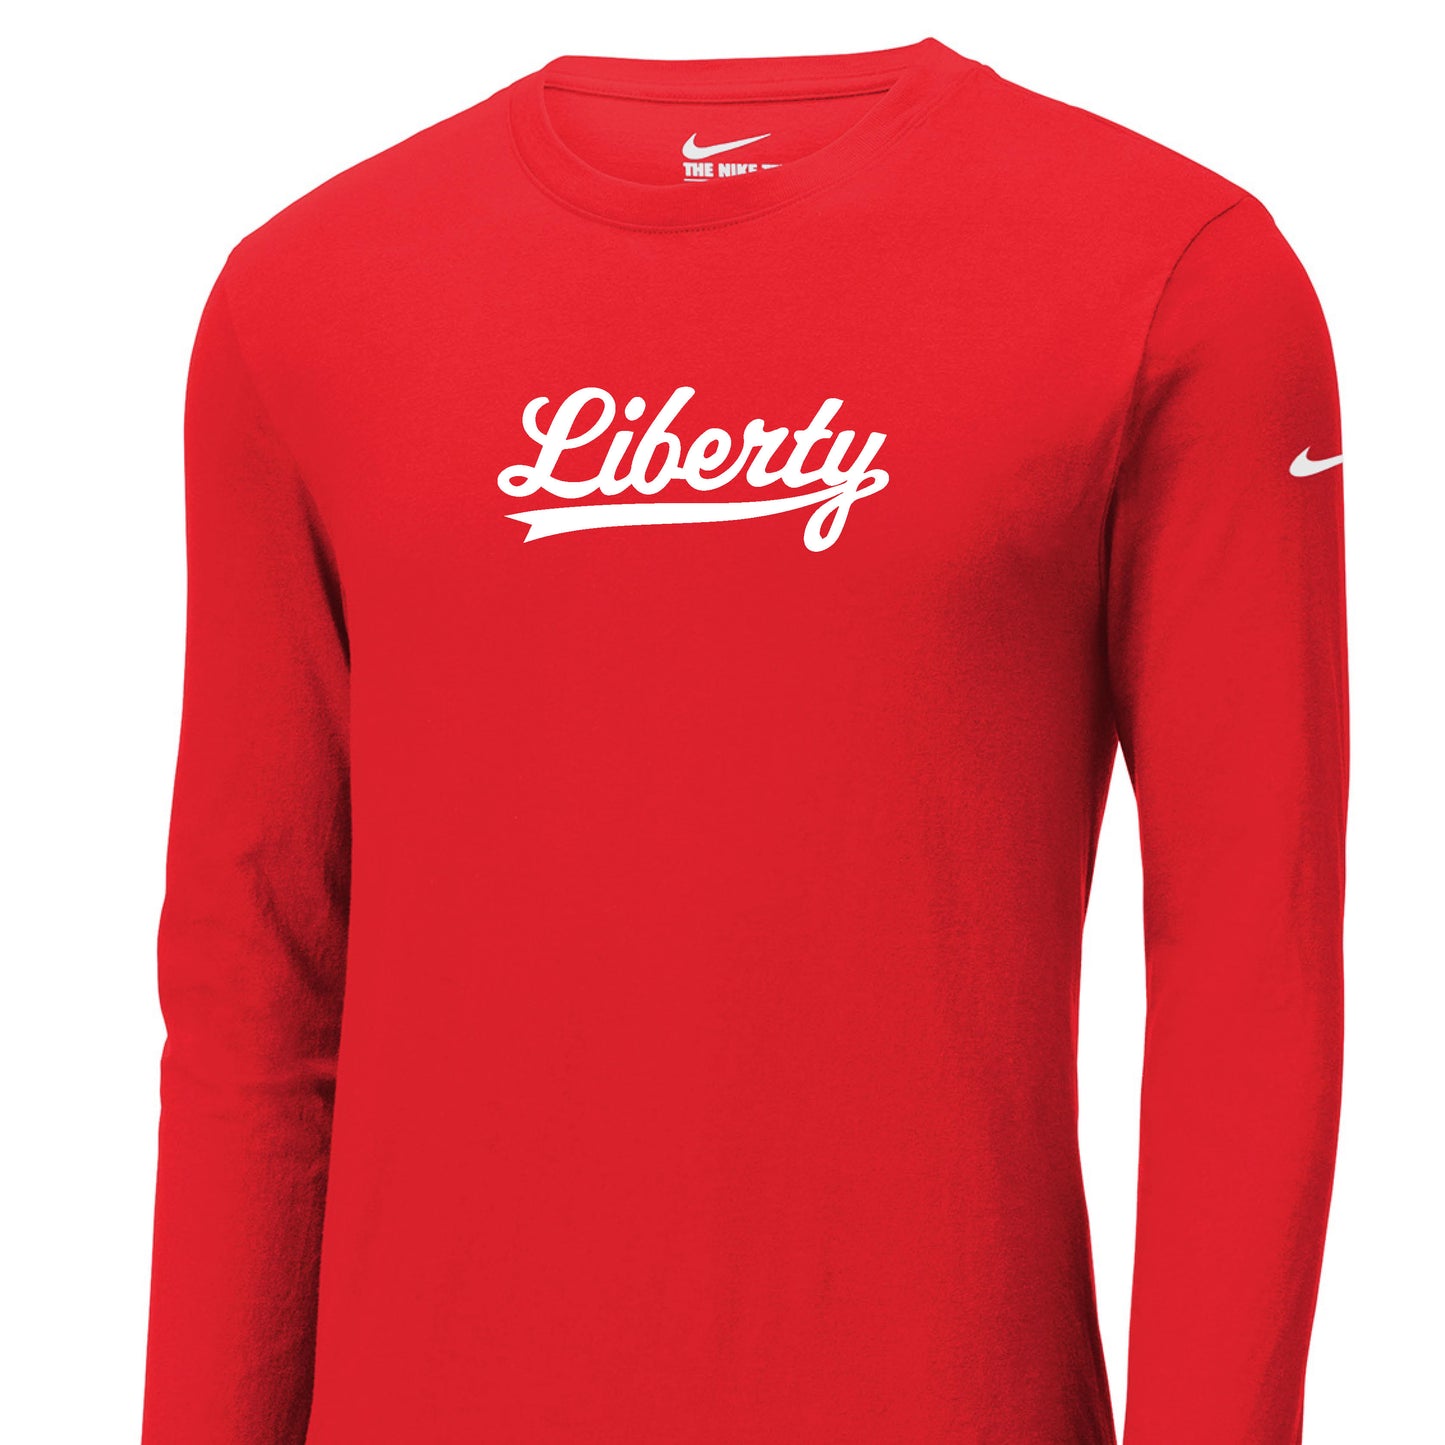 Liberty Long Sleeve Red Nike Shirt